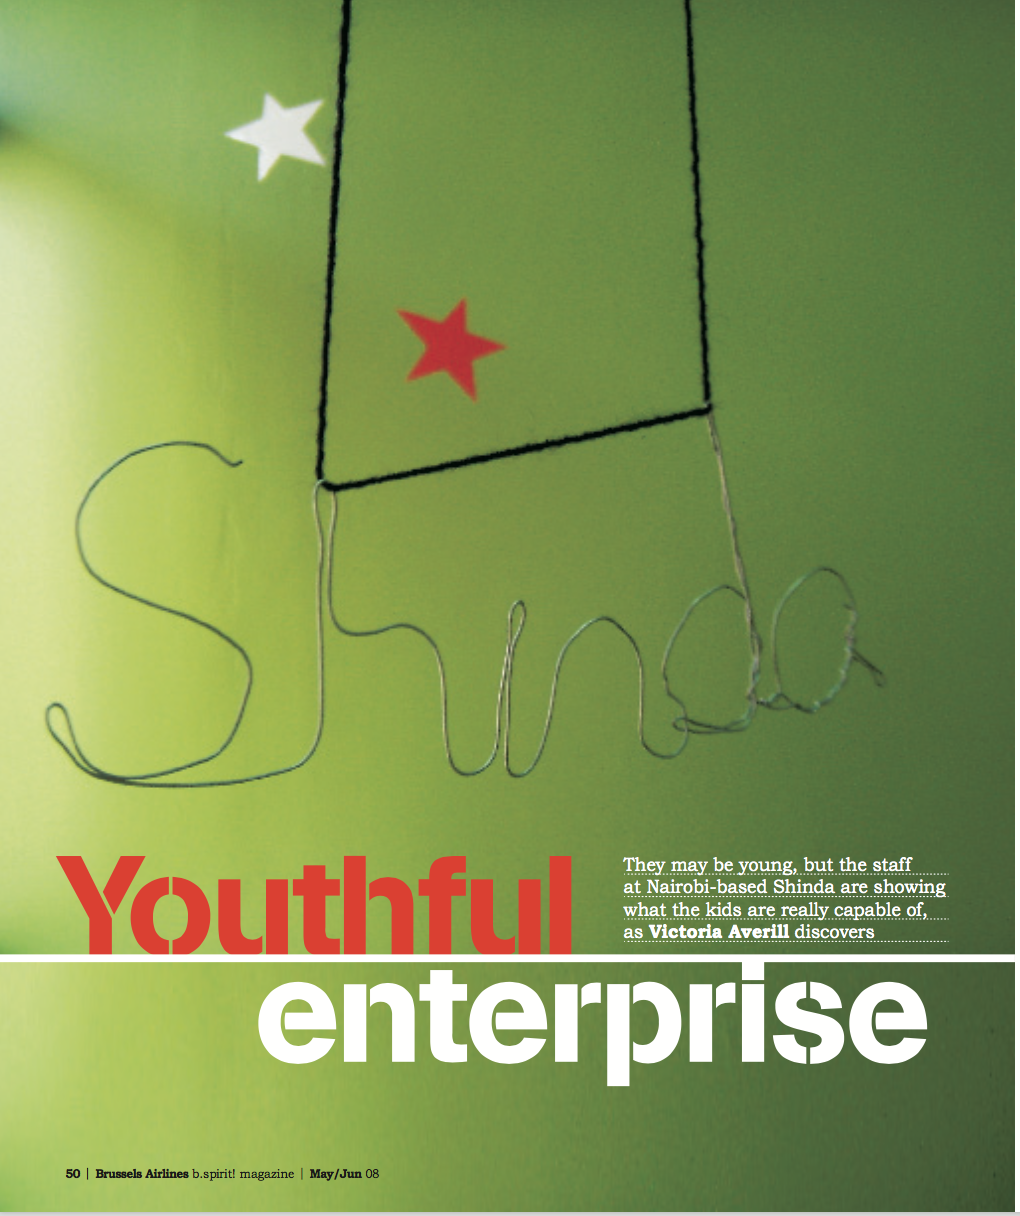 Youthful enterprise. Kenya 2008